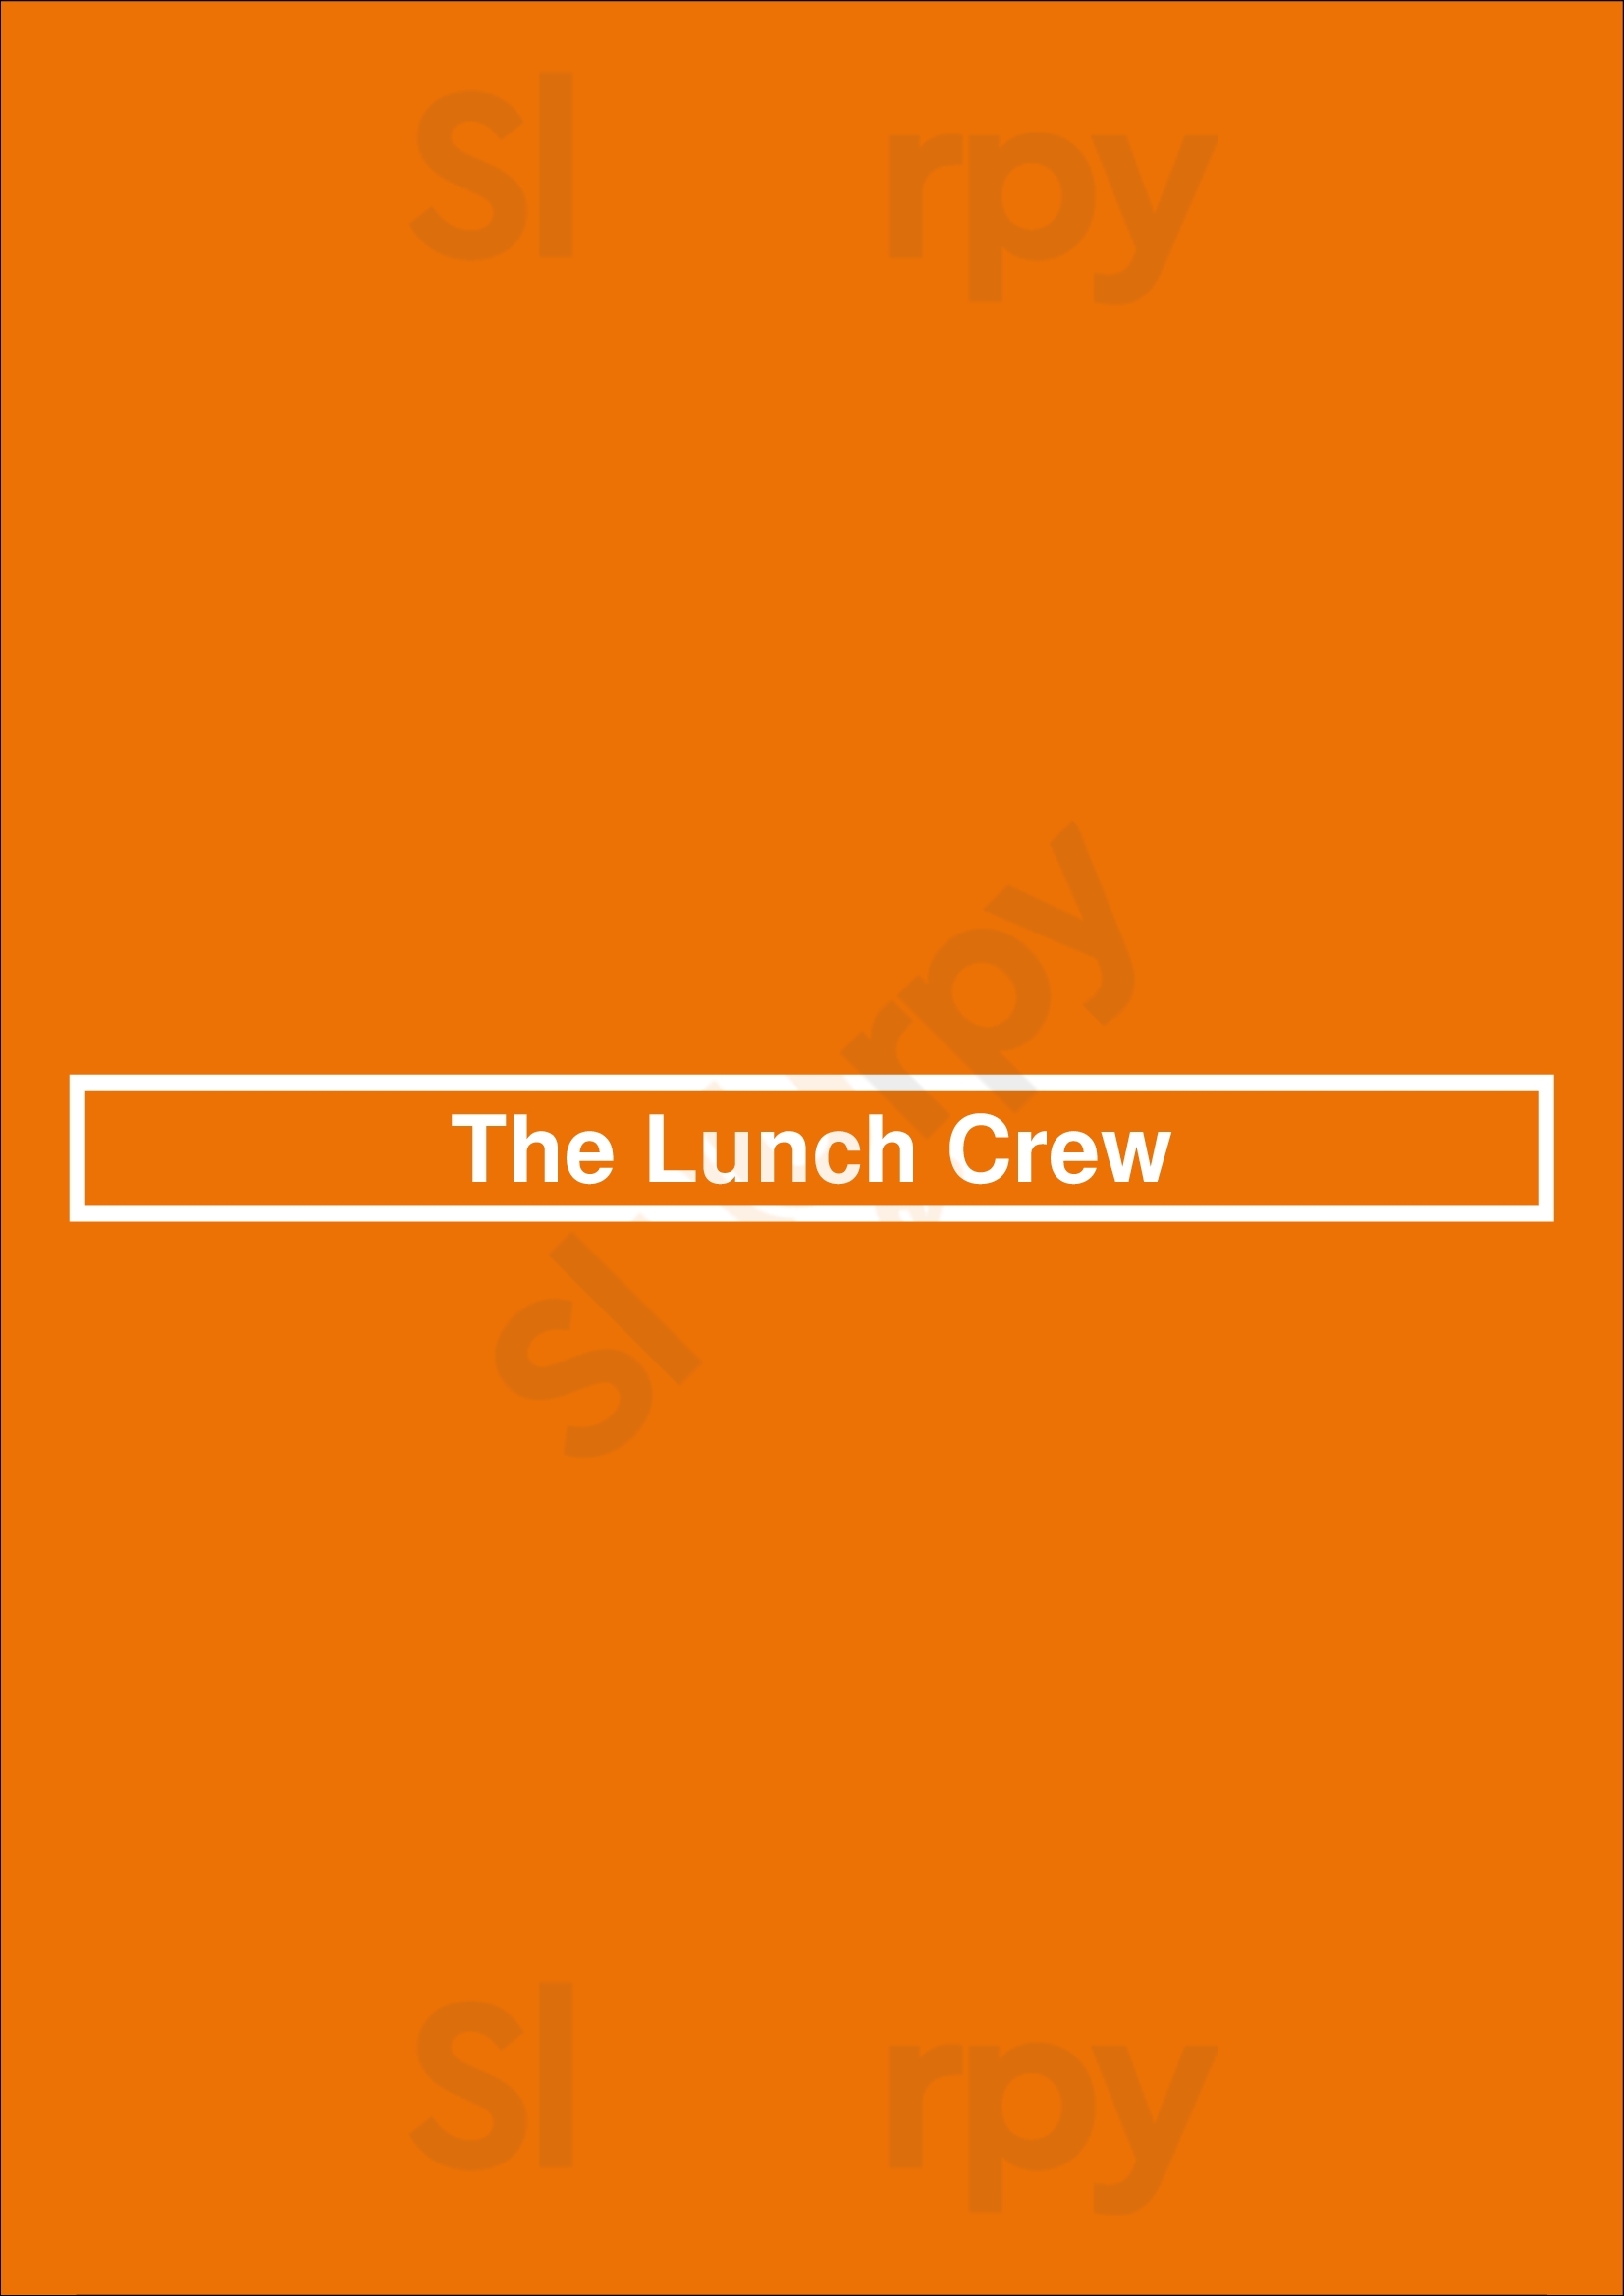 The Lunch Crew Las Vegas Menu - 1